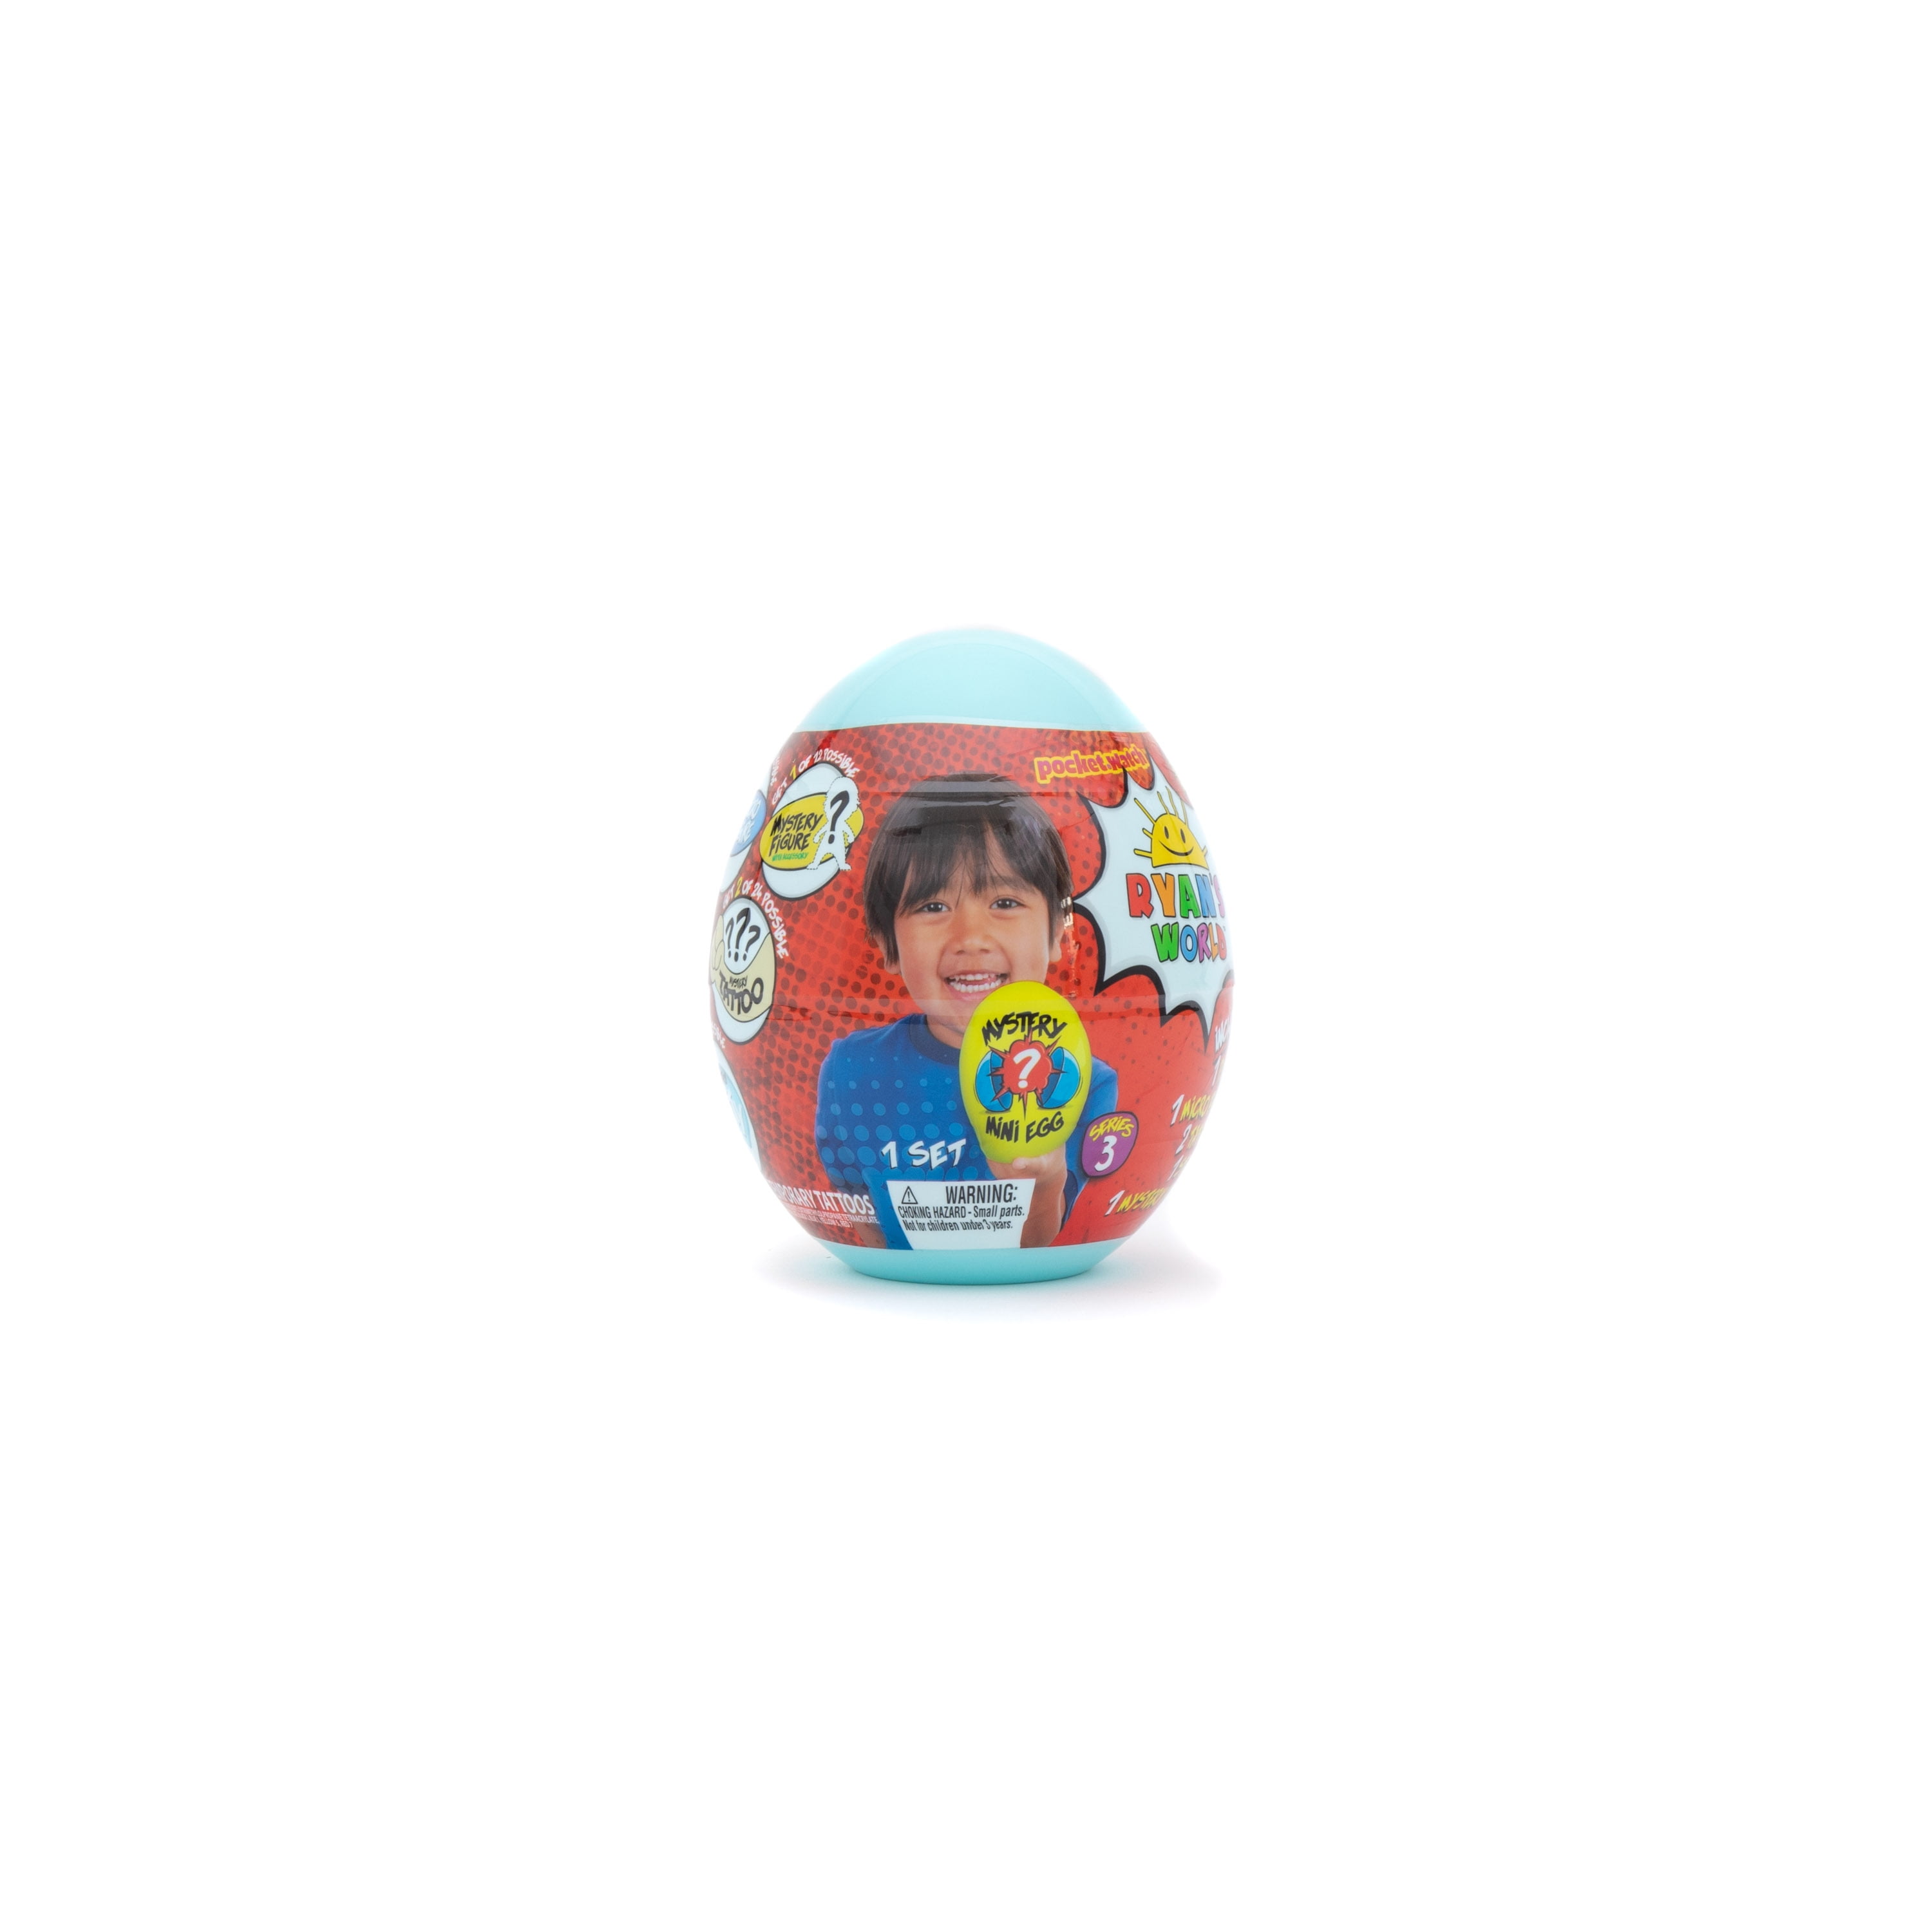 Mixed Colours RYAN'S WORLD 200012.506 Mini Mystery Egg Surprise